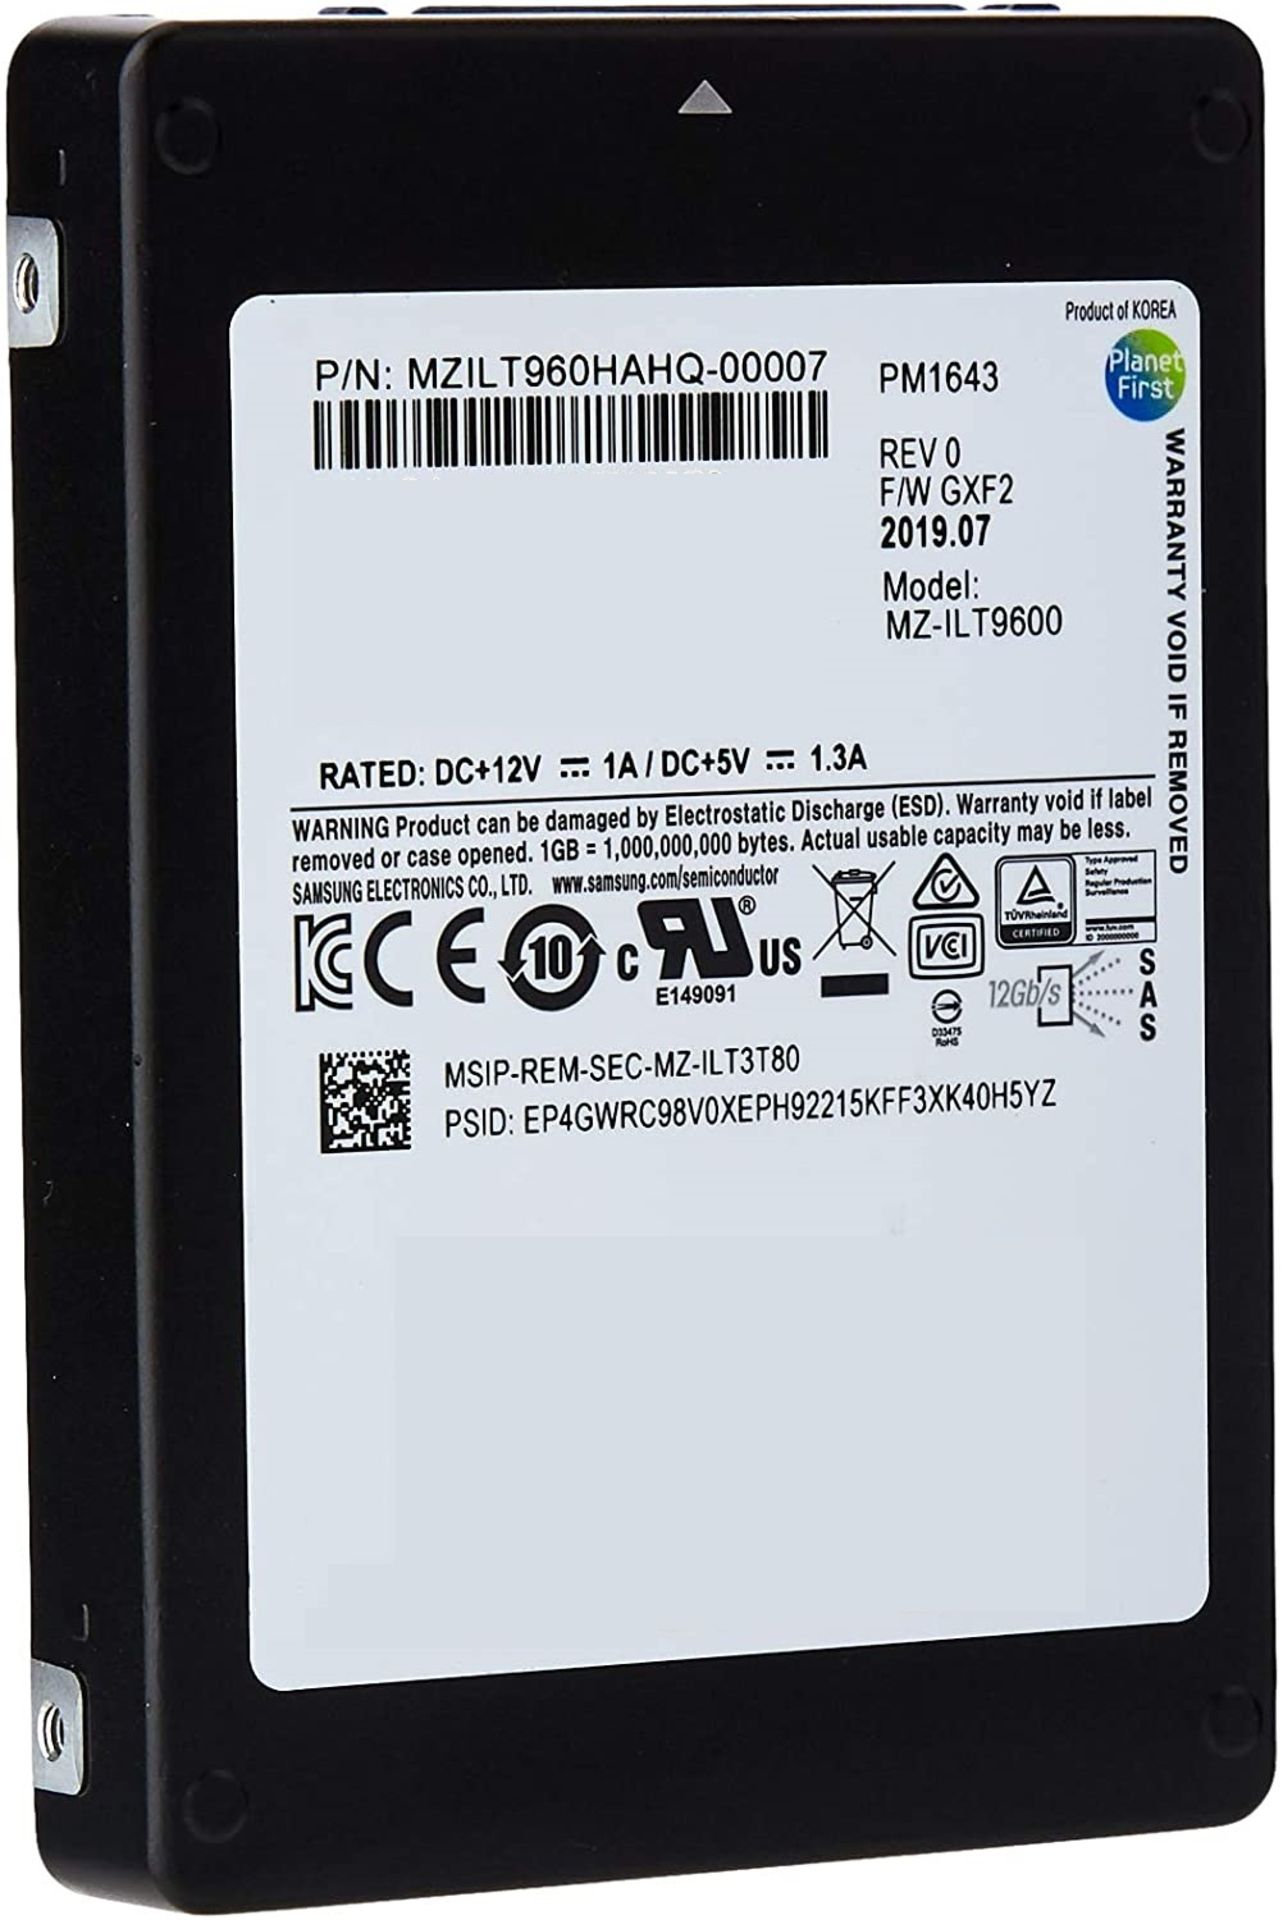 RRP £439.99 Samsung 960GB PM1643 2.5 Inch Enterprise SSD SAS-3 12Gb/s, 2100MB/s Read, 1000MB/s Write